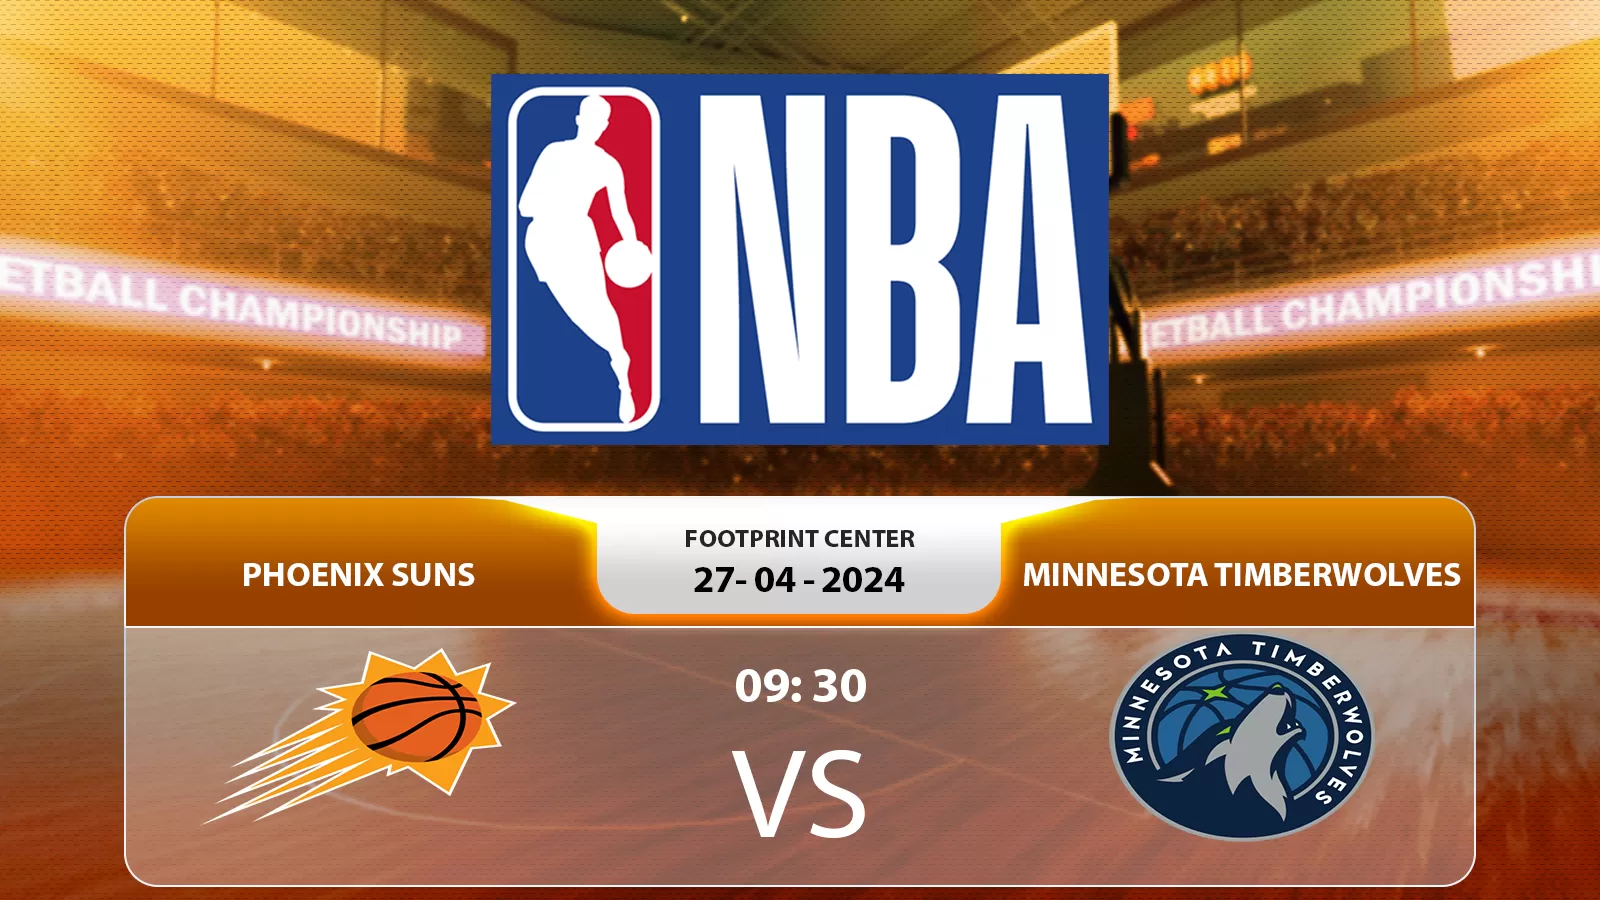 Phoenix Suns vs Minnesota Timberwolves 9h30 27/4/2024